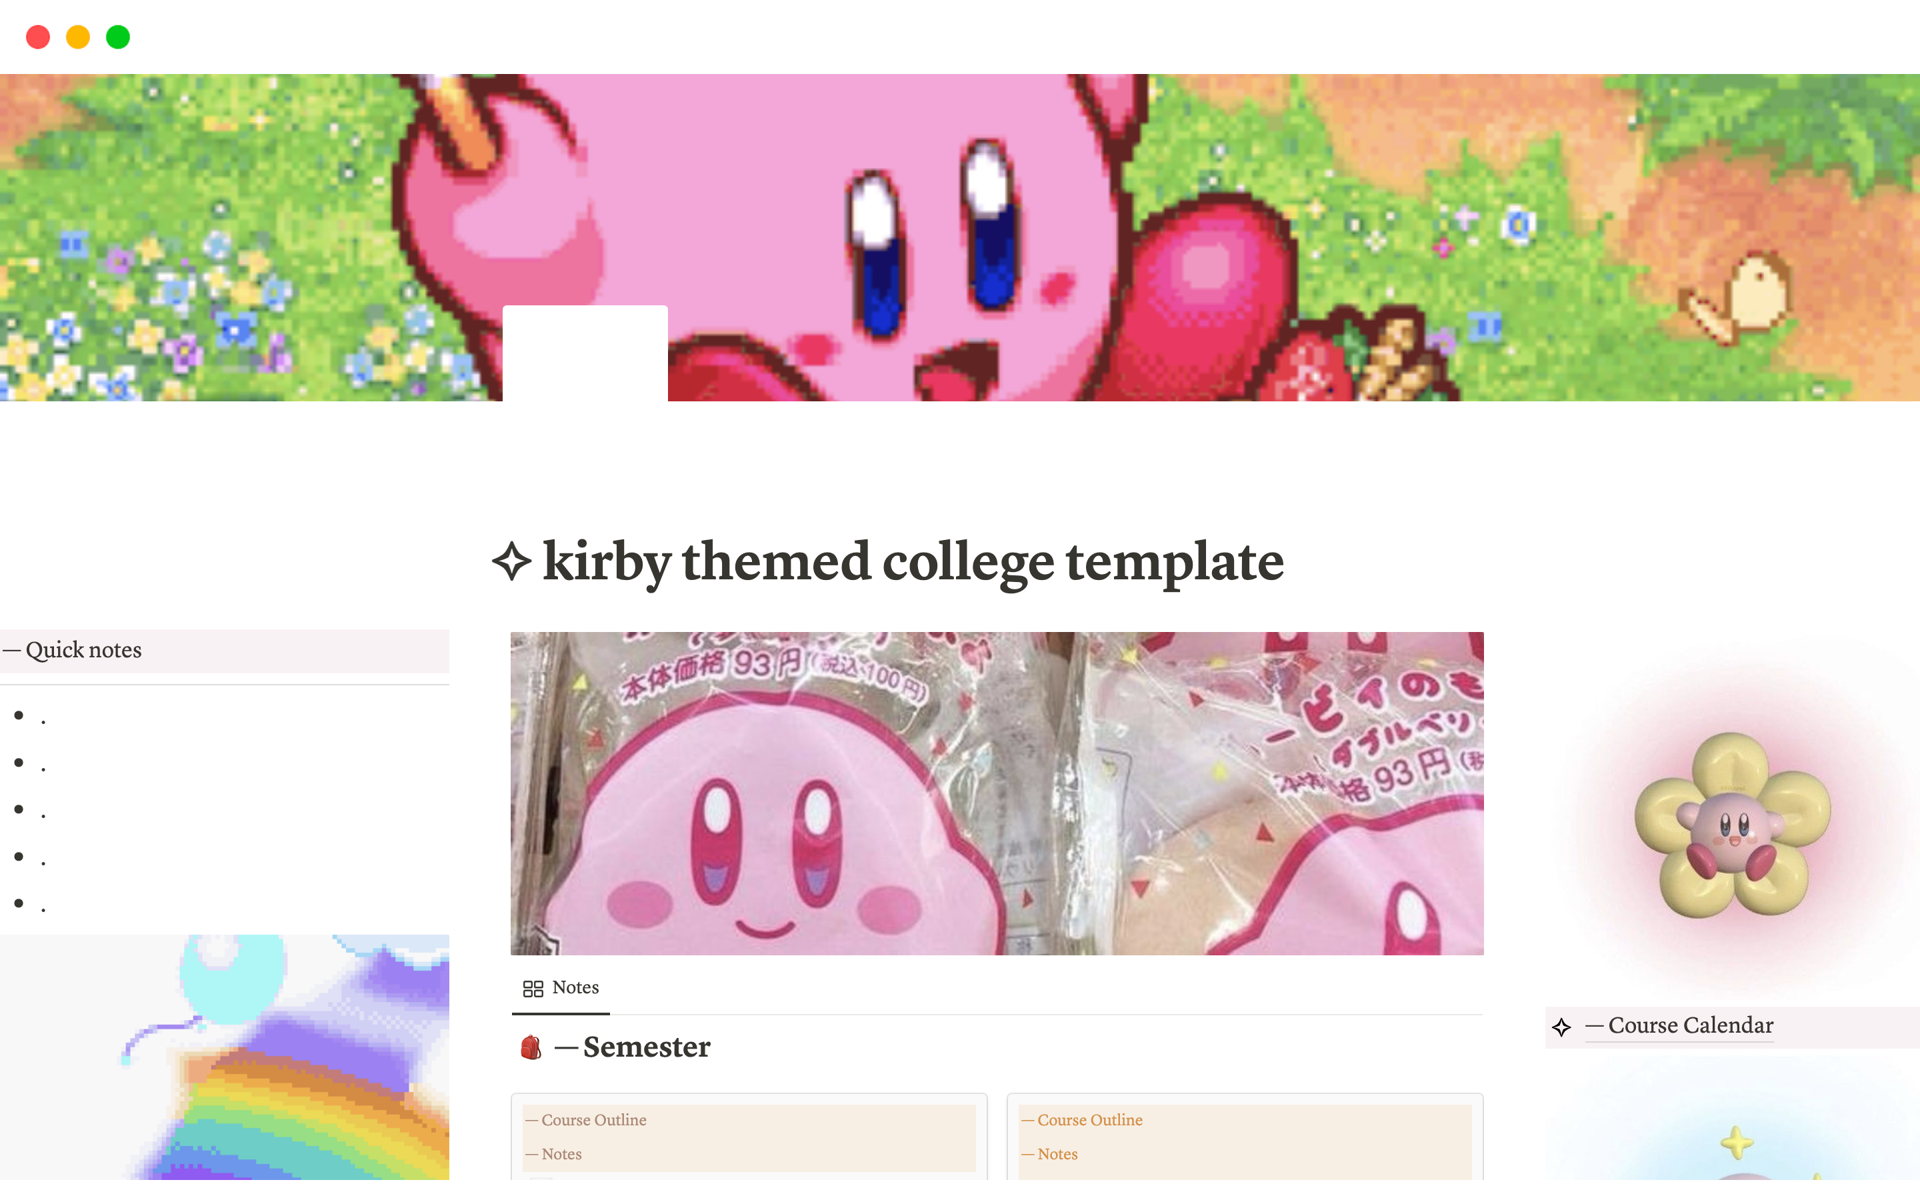 Vista previa de una plantilla para kirby themed college template